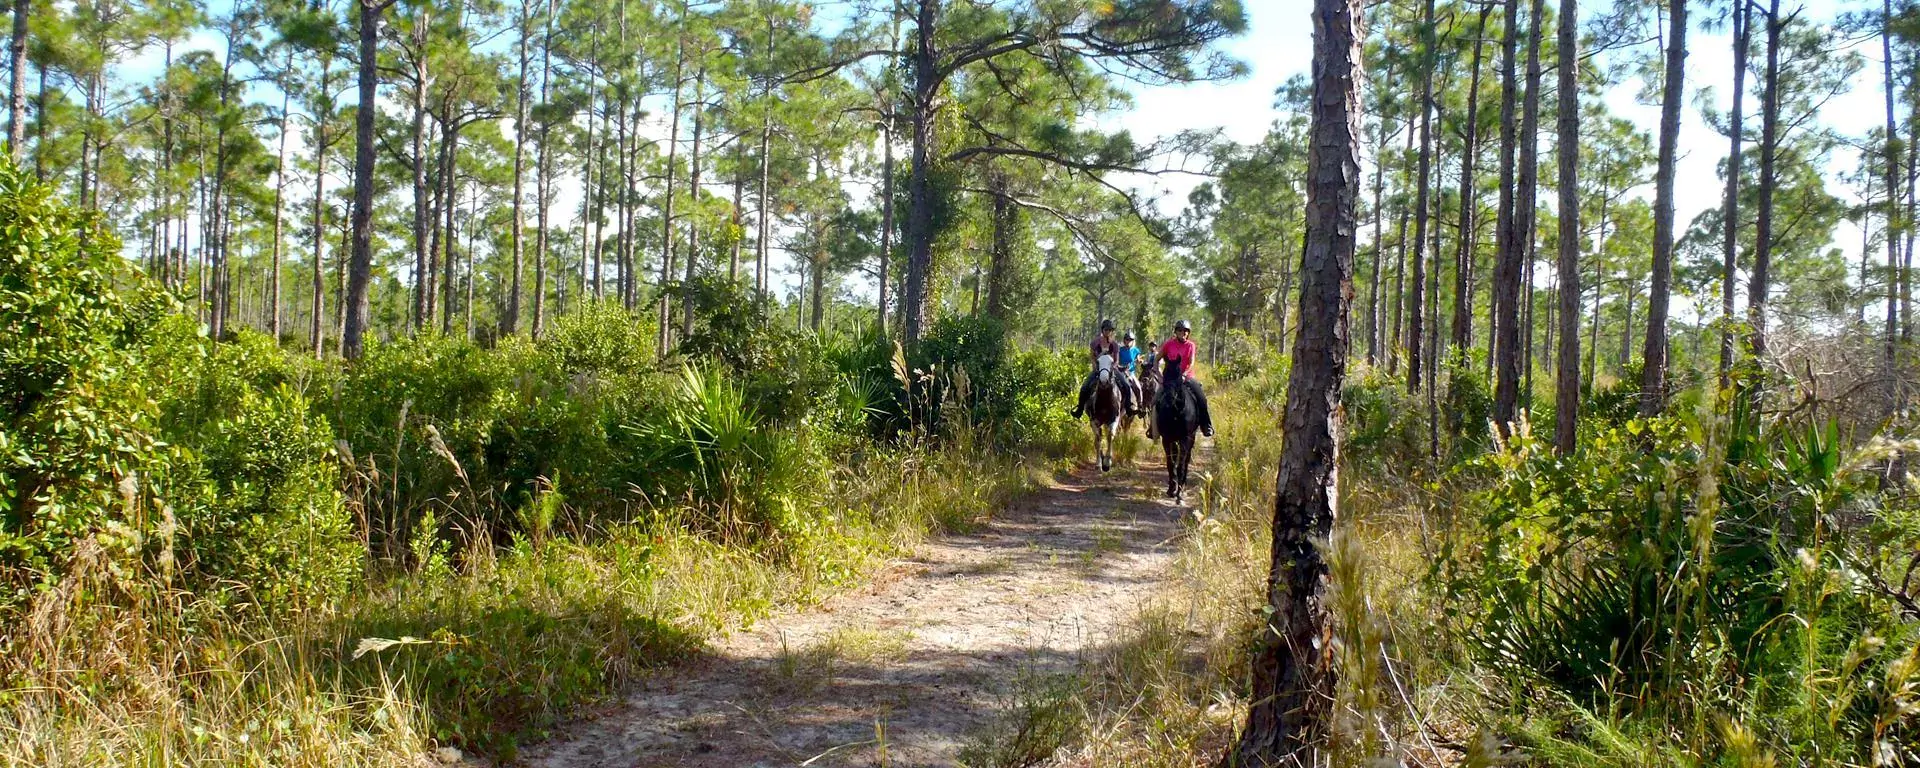 Riders on horseback along a trail at Pal Mar East